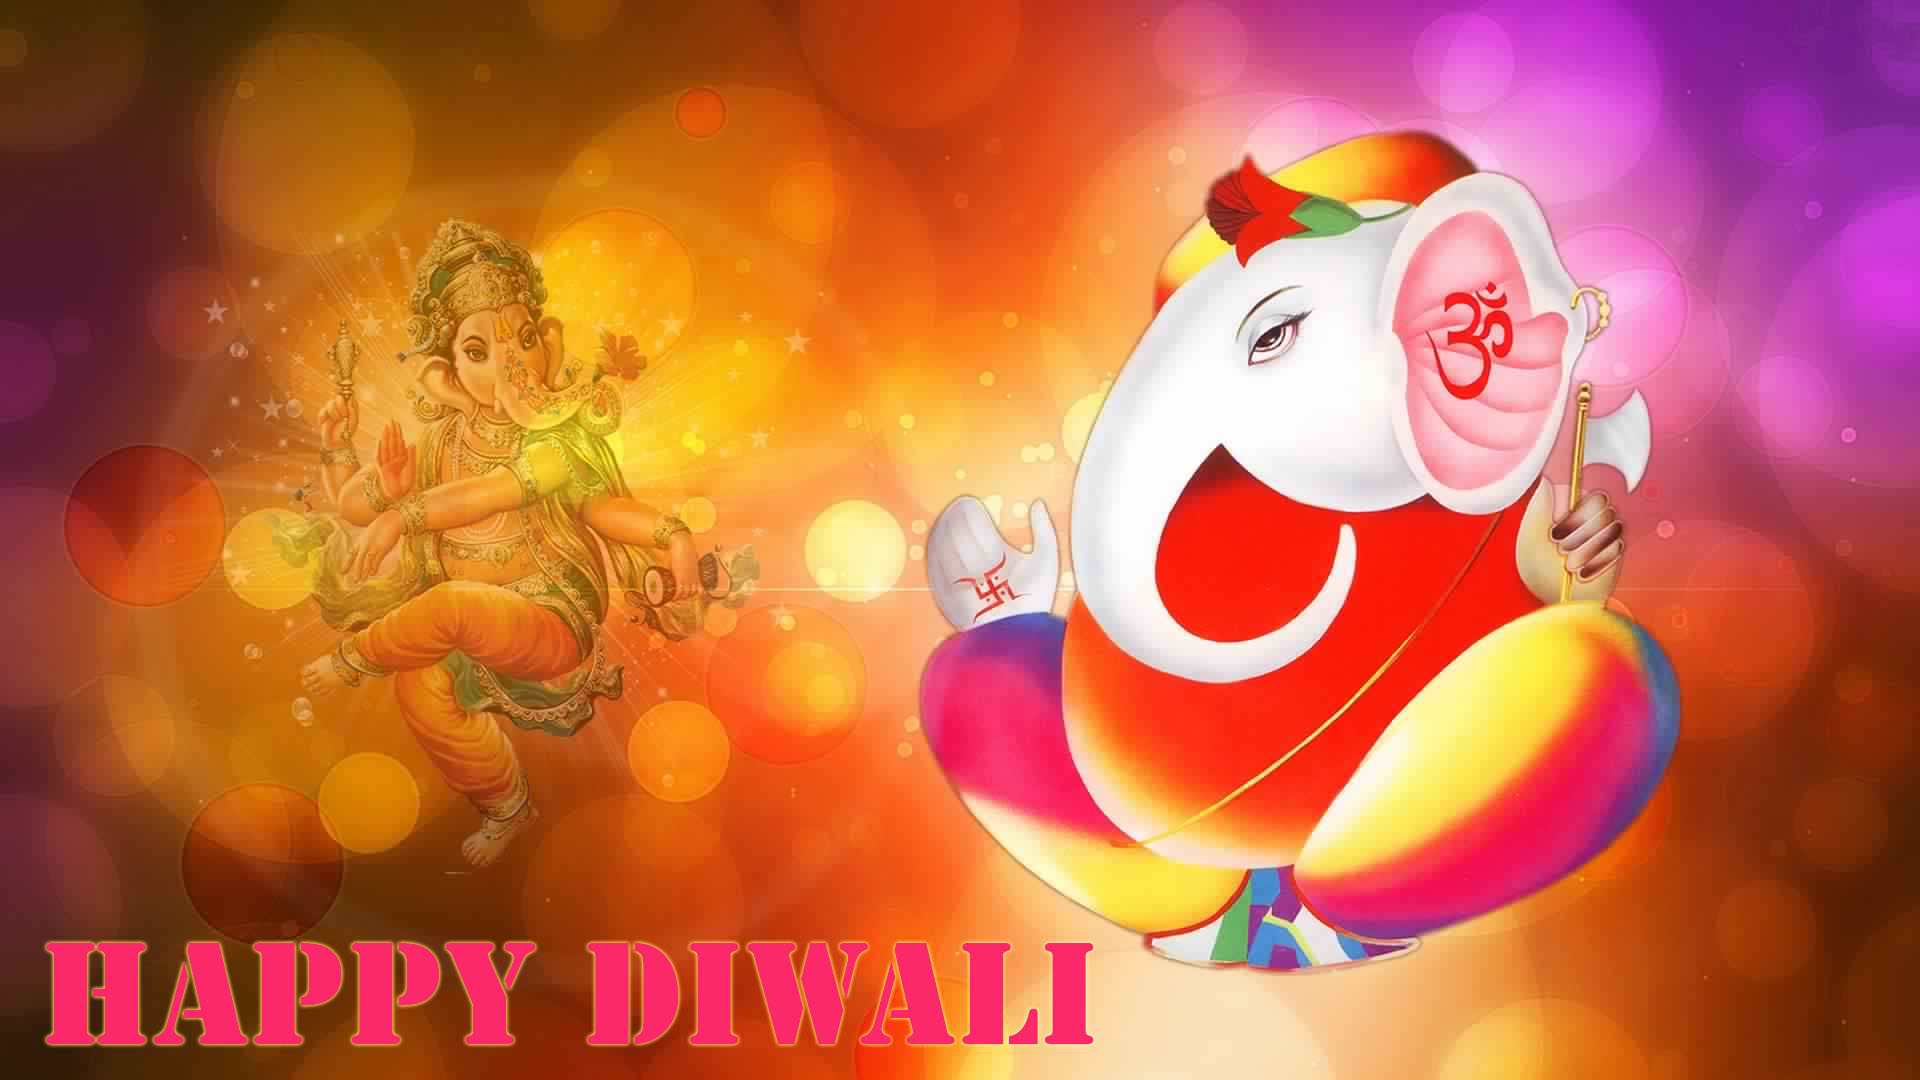 Ganesha Diwali Hd Image For Desktop - Lord Ganesha - 1920x1080 Wallpaper -  